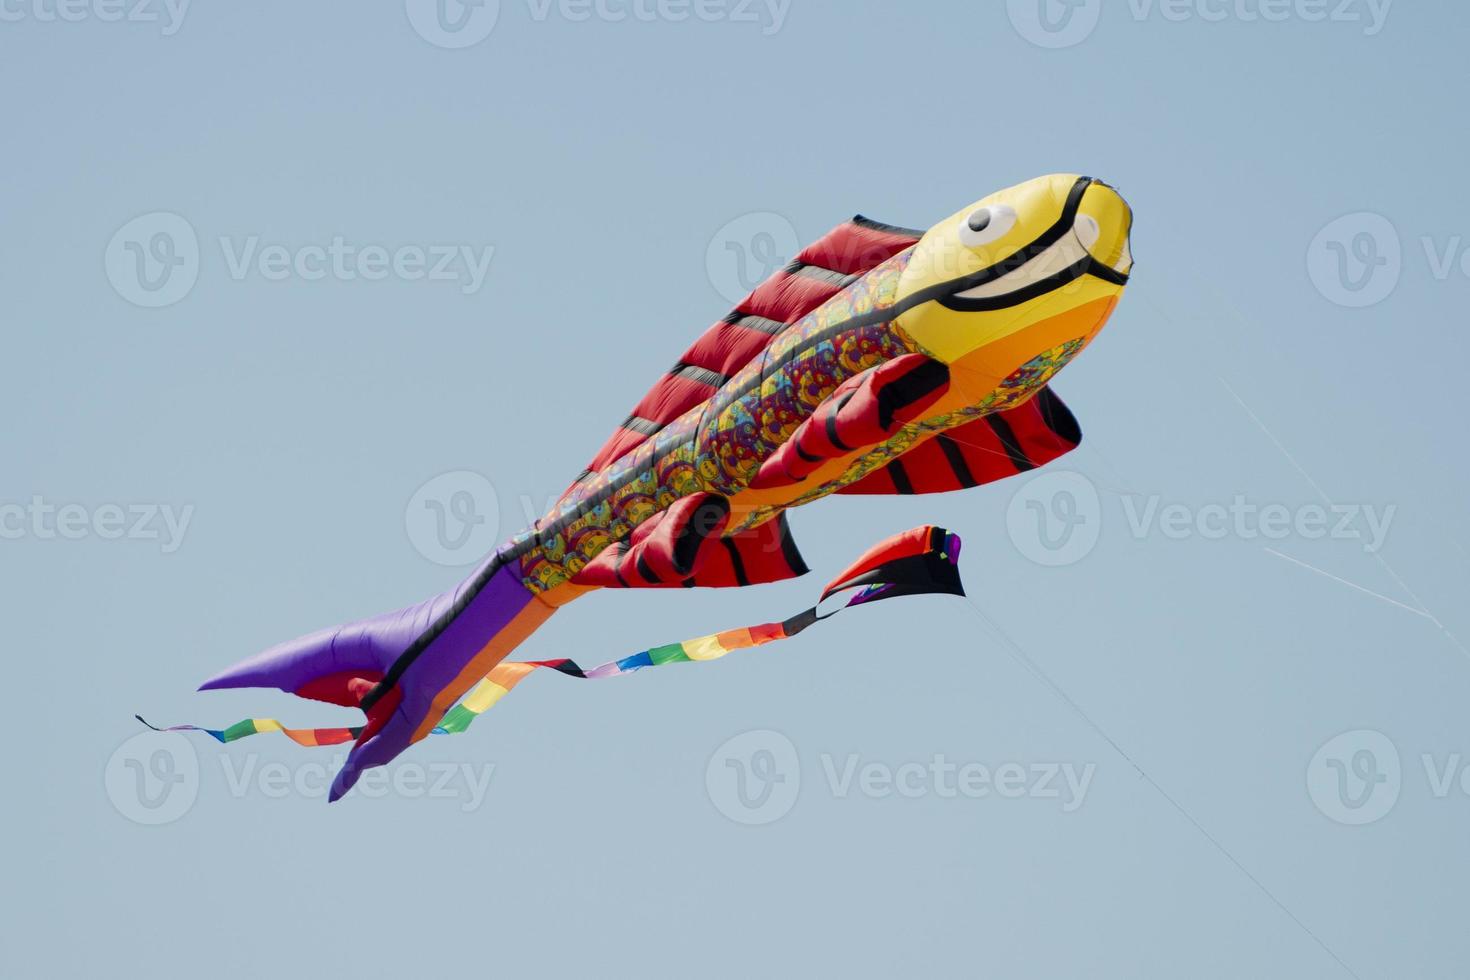 Fish kite on the sky background photo